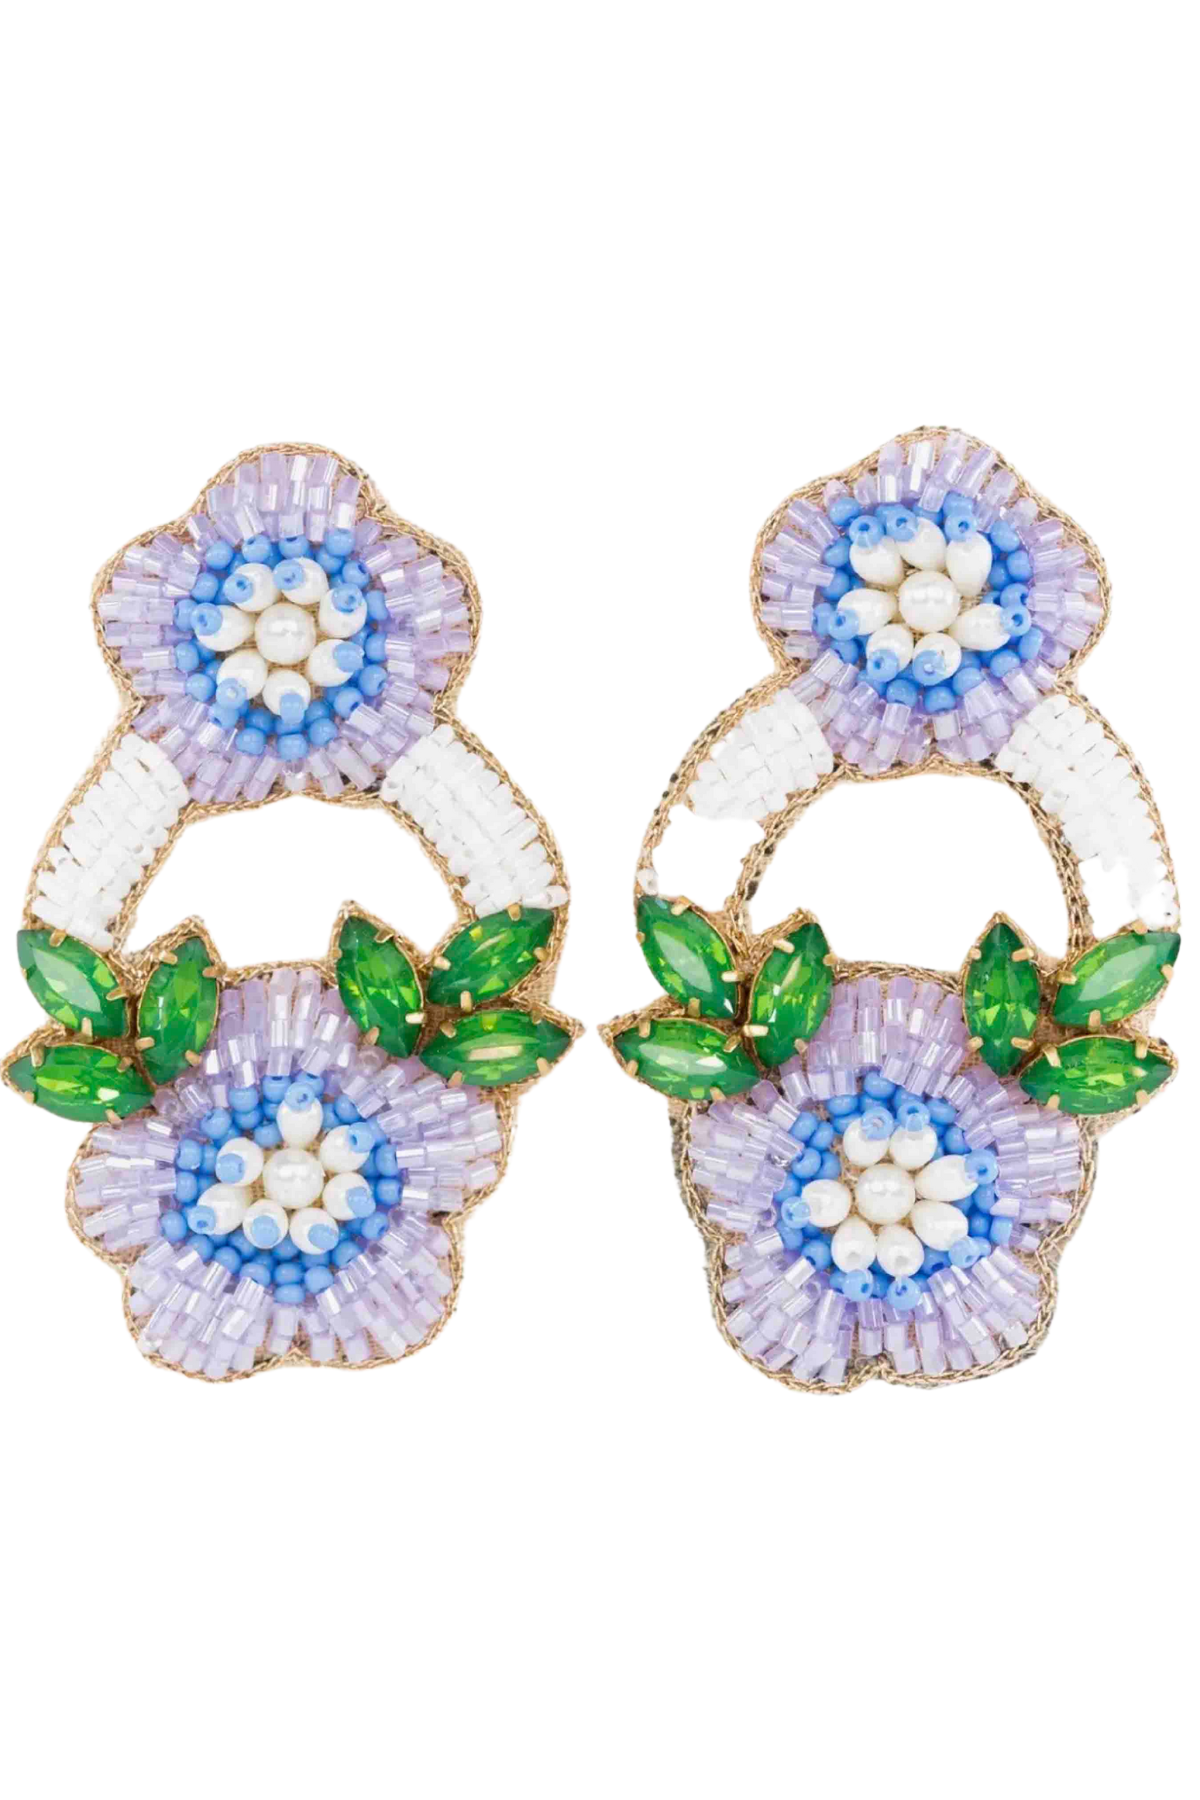 Periwinkle East Hampton Flower Earrings by Beth Ladd Collections